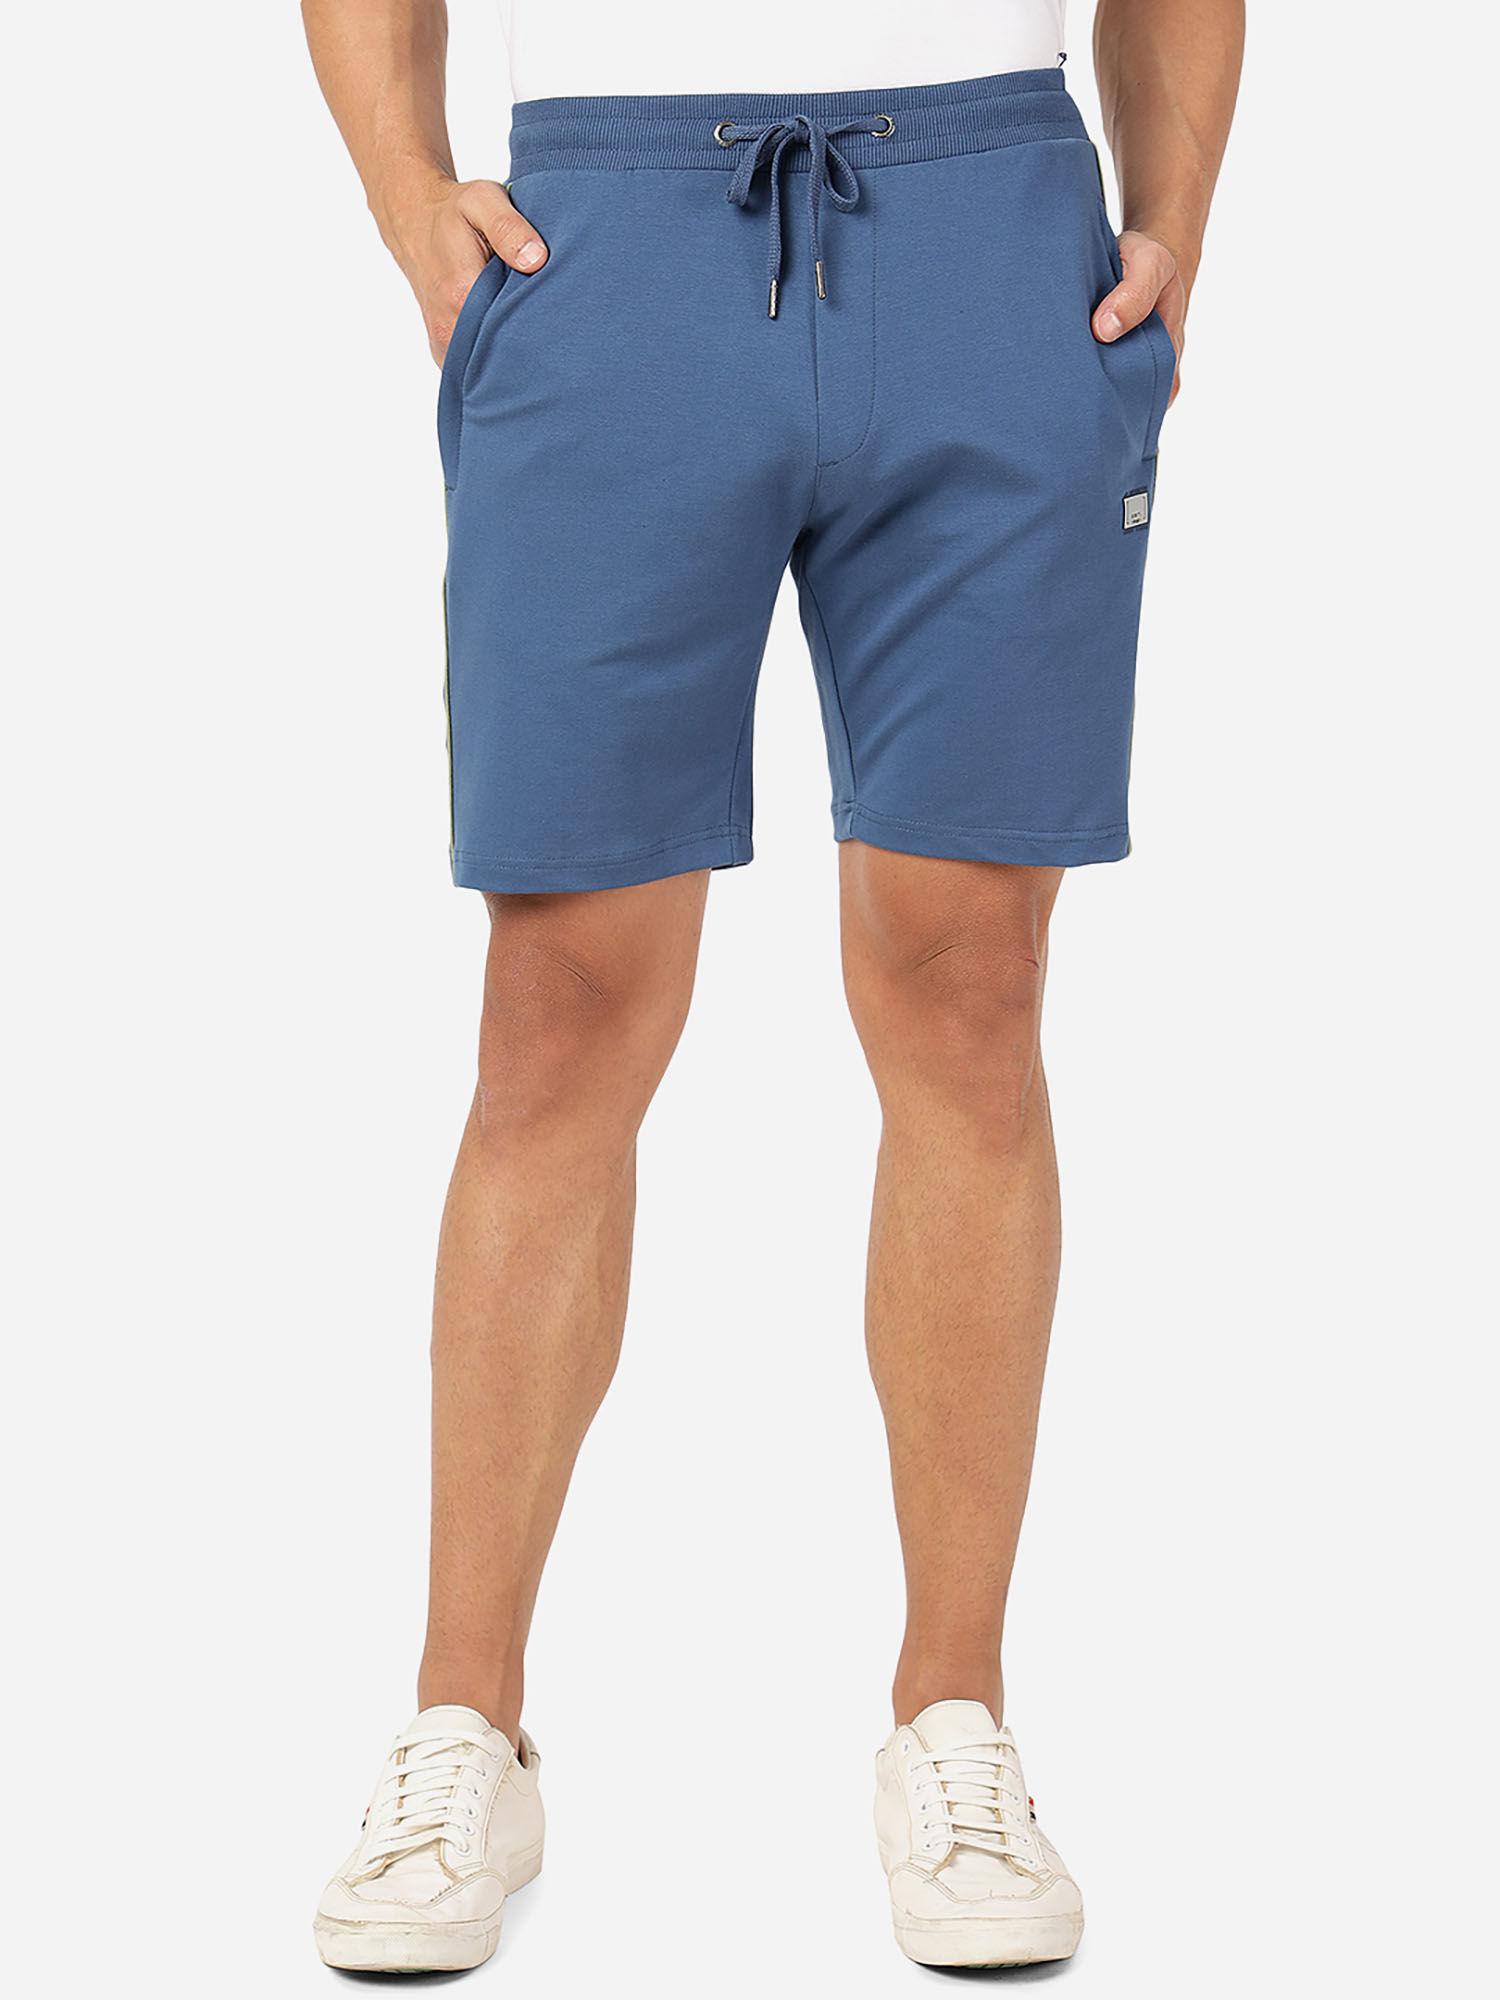 mens 100% cotton solid slim fit shorts blue